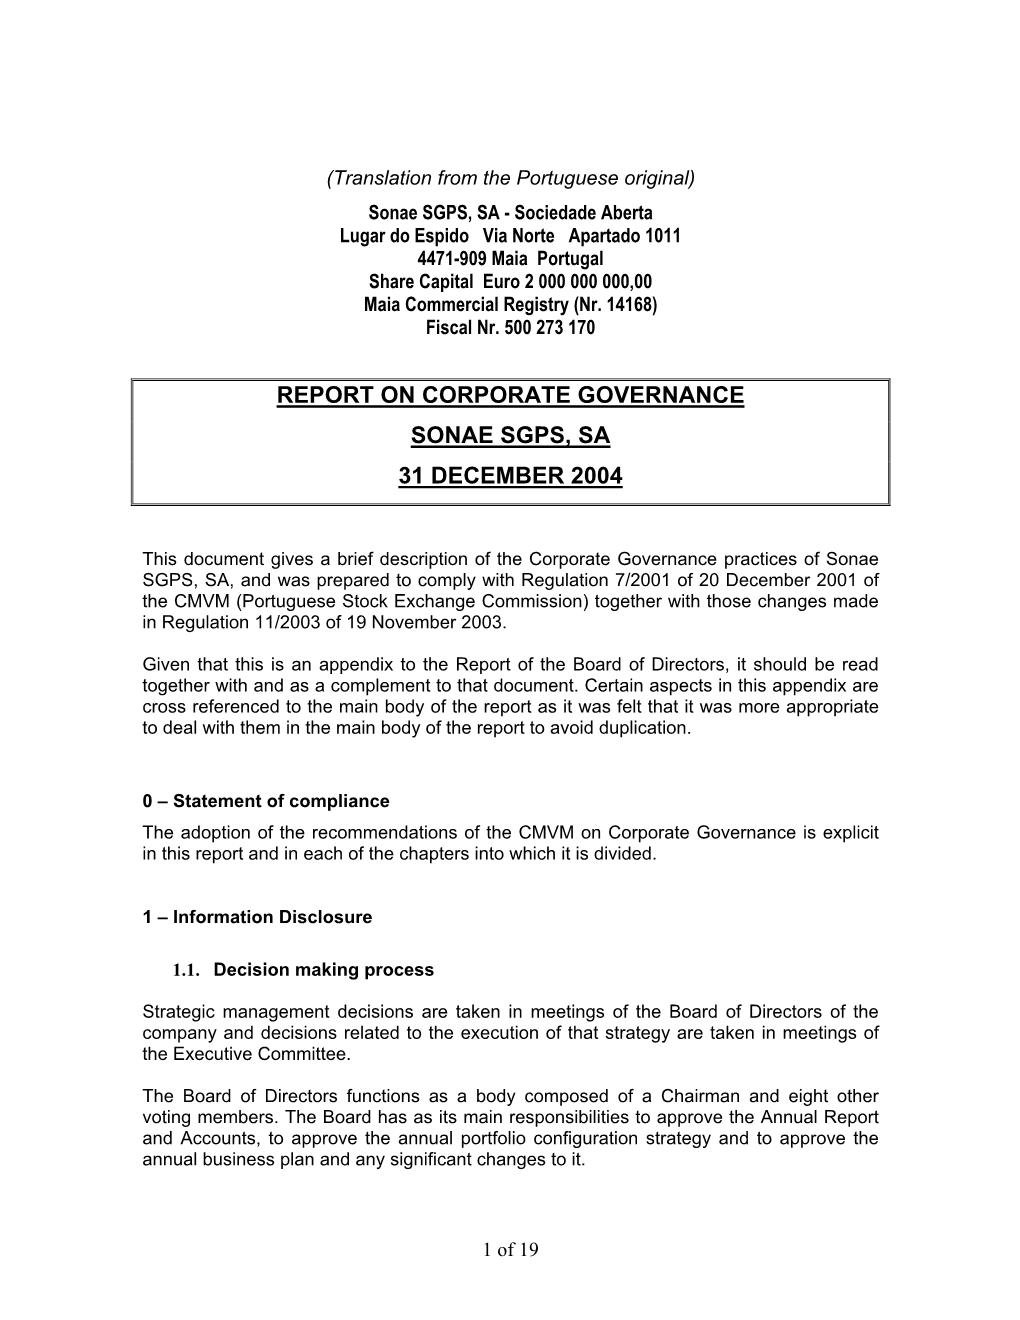 Report on Corporate Governance Sonae Sgps, Sa 31 December 2004